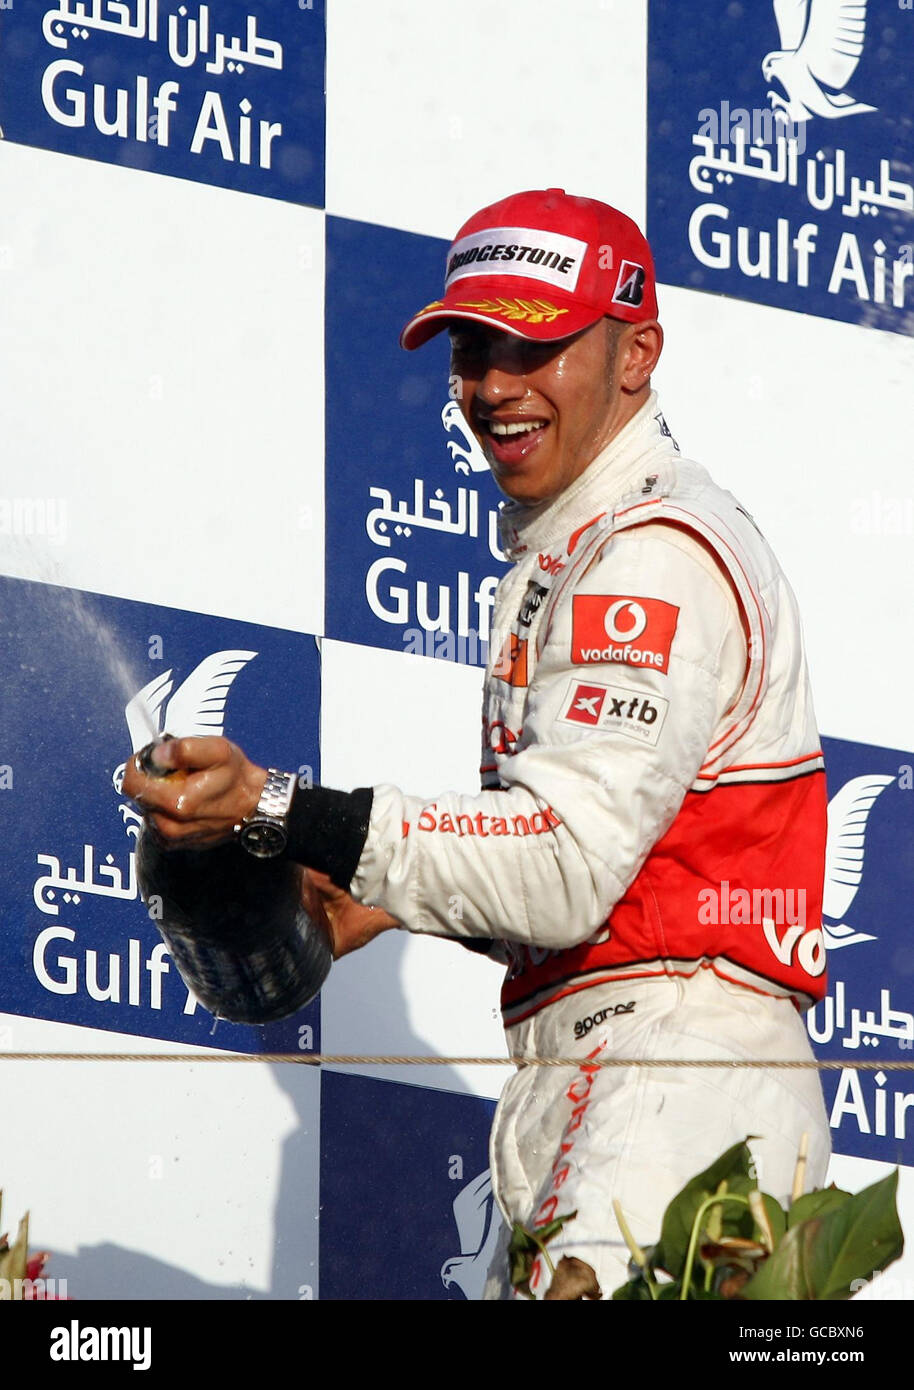 McLaren's Lewis Hamilton celebrates his third place during the Gulf Air Bahrain Grand Prix at the Bahrain International Circuit in Sakhir, Bahrain. Stock Photo